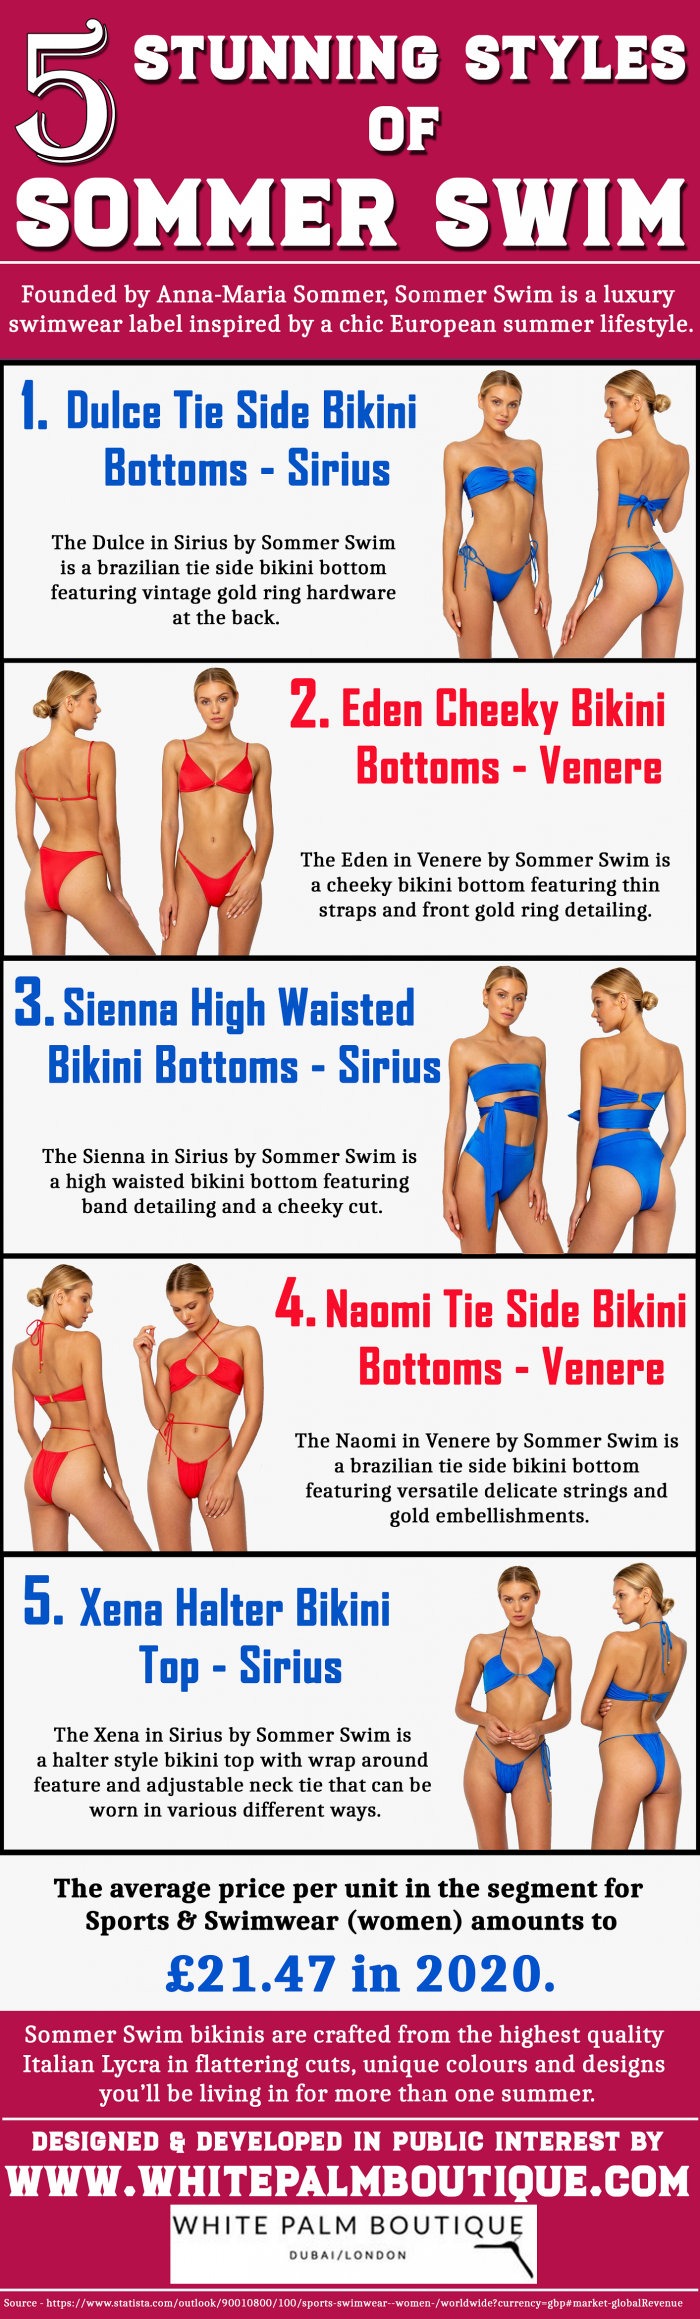 5 Stunning Styles of Sommer Swim